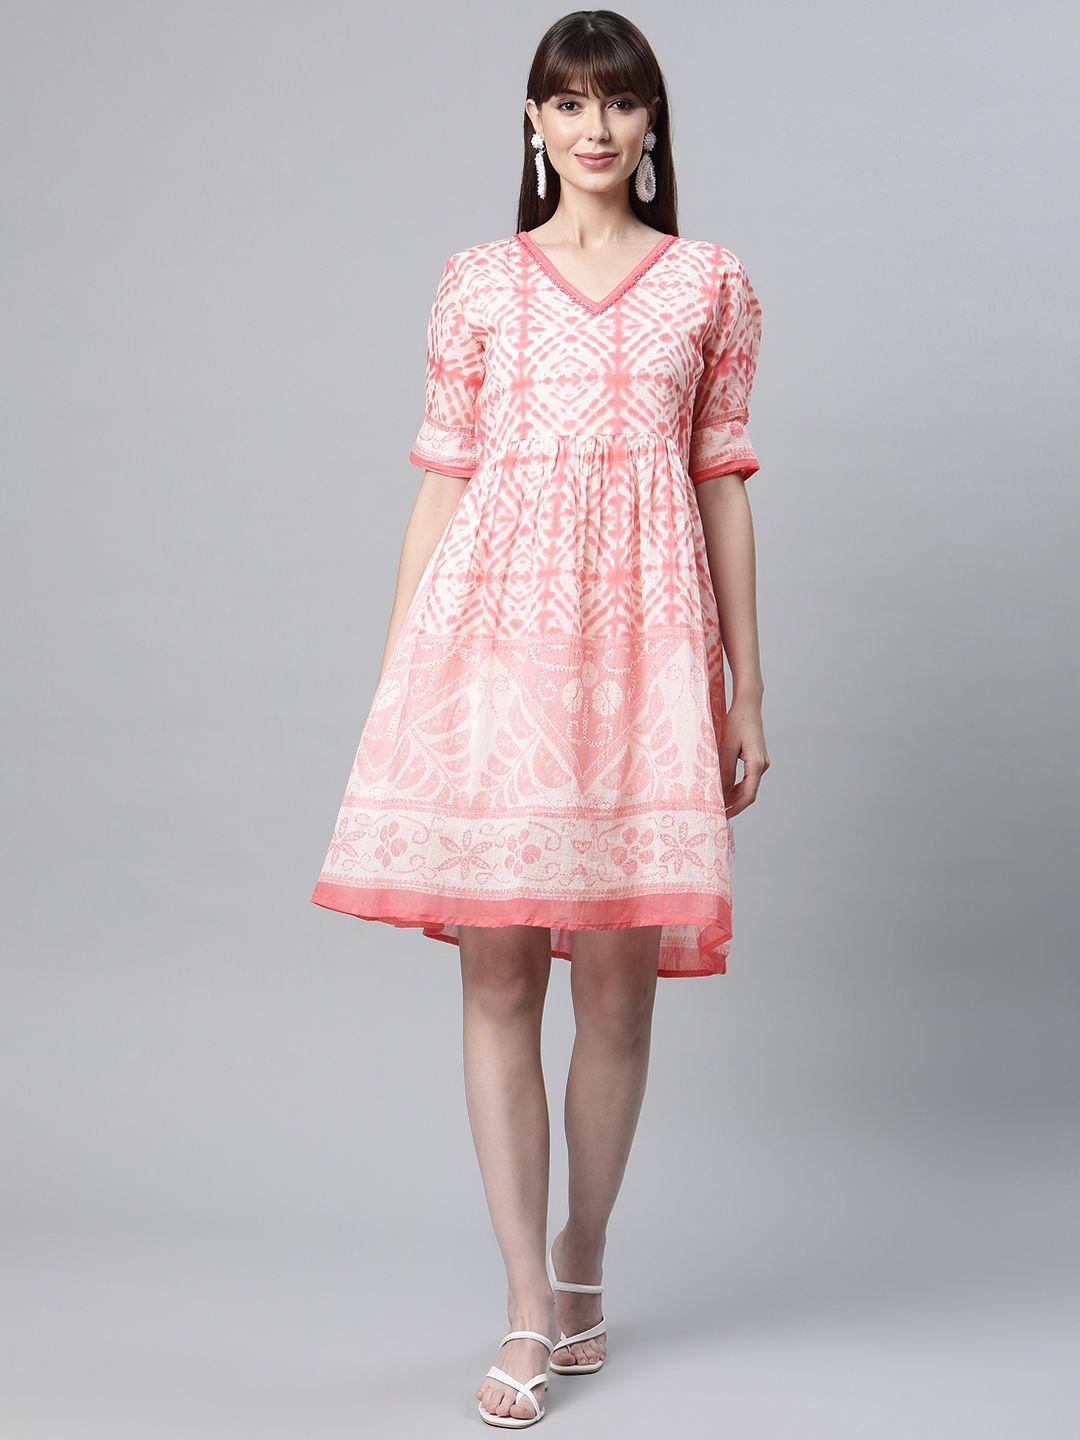 readiprint fashions pink & white tie and dye a-line dress